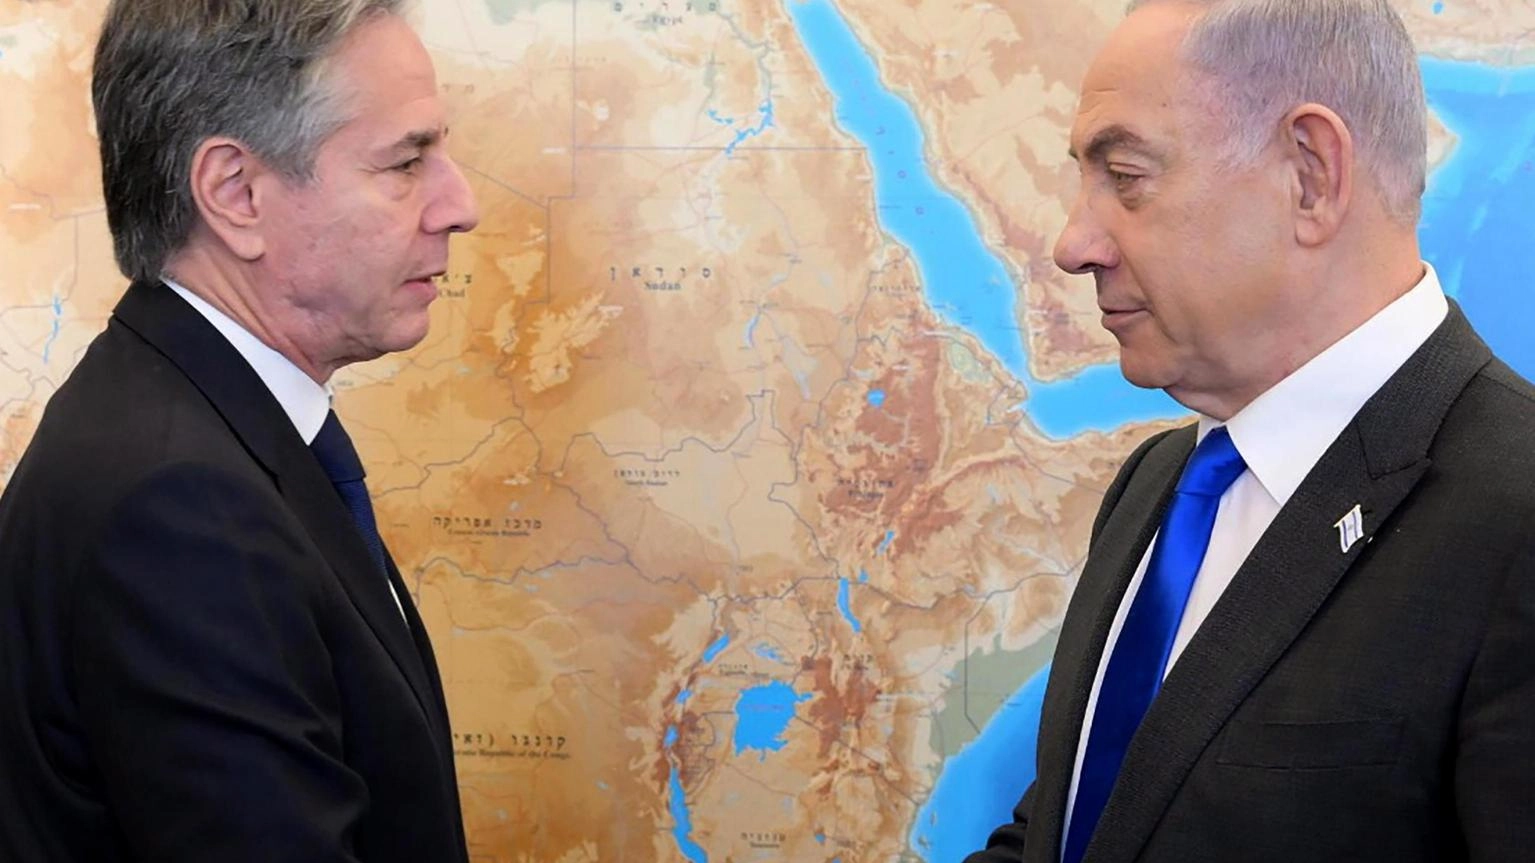 Netanyahu parlerà staserà sull'accordo per gli ostaggi